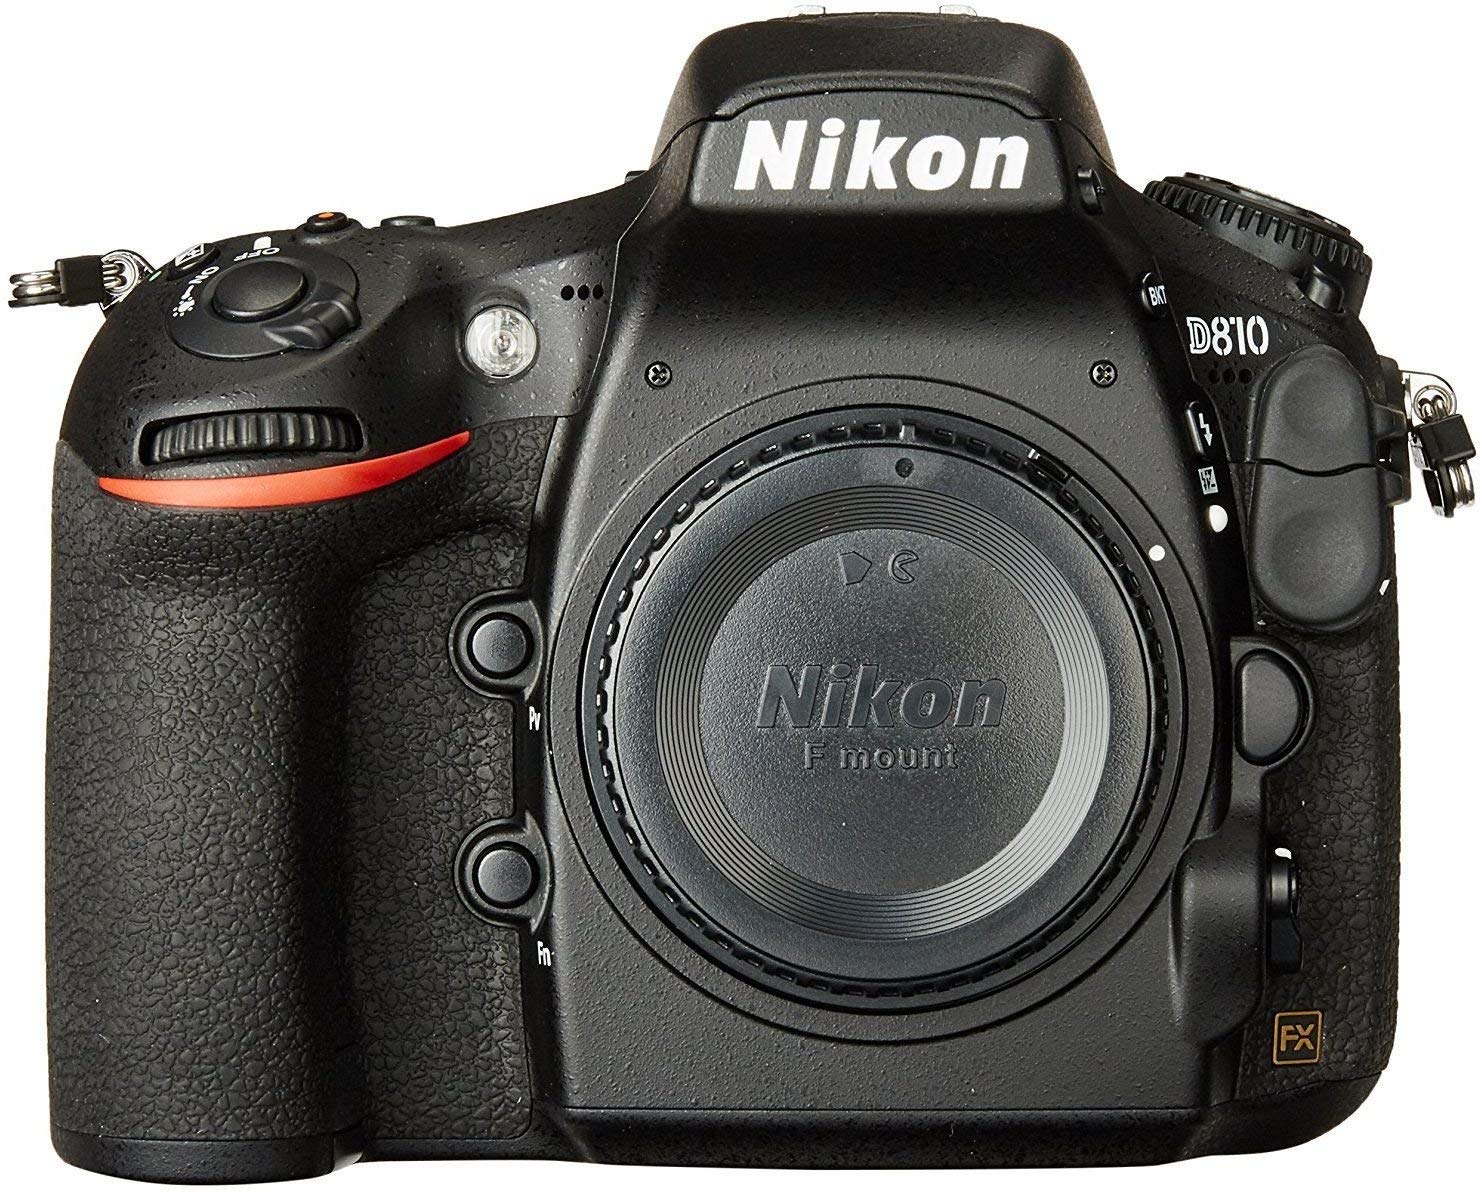 NIKO9 هيكل كاميرا نيكون D810 الرقمية ذات العدسة الأحادية العاكسة بصيغة FX